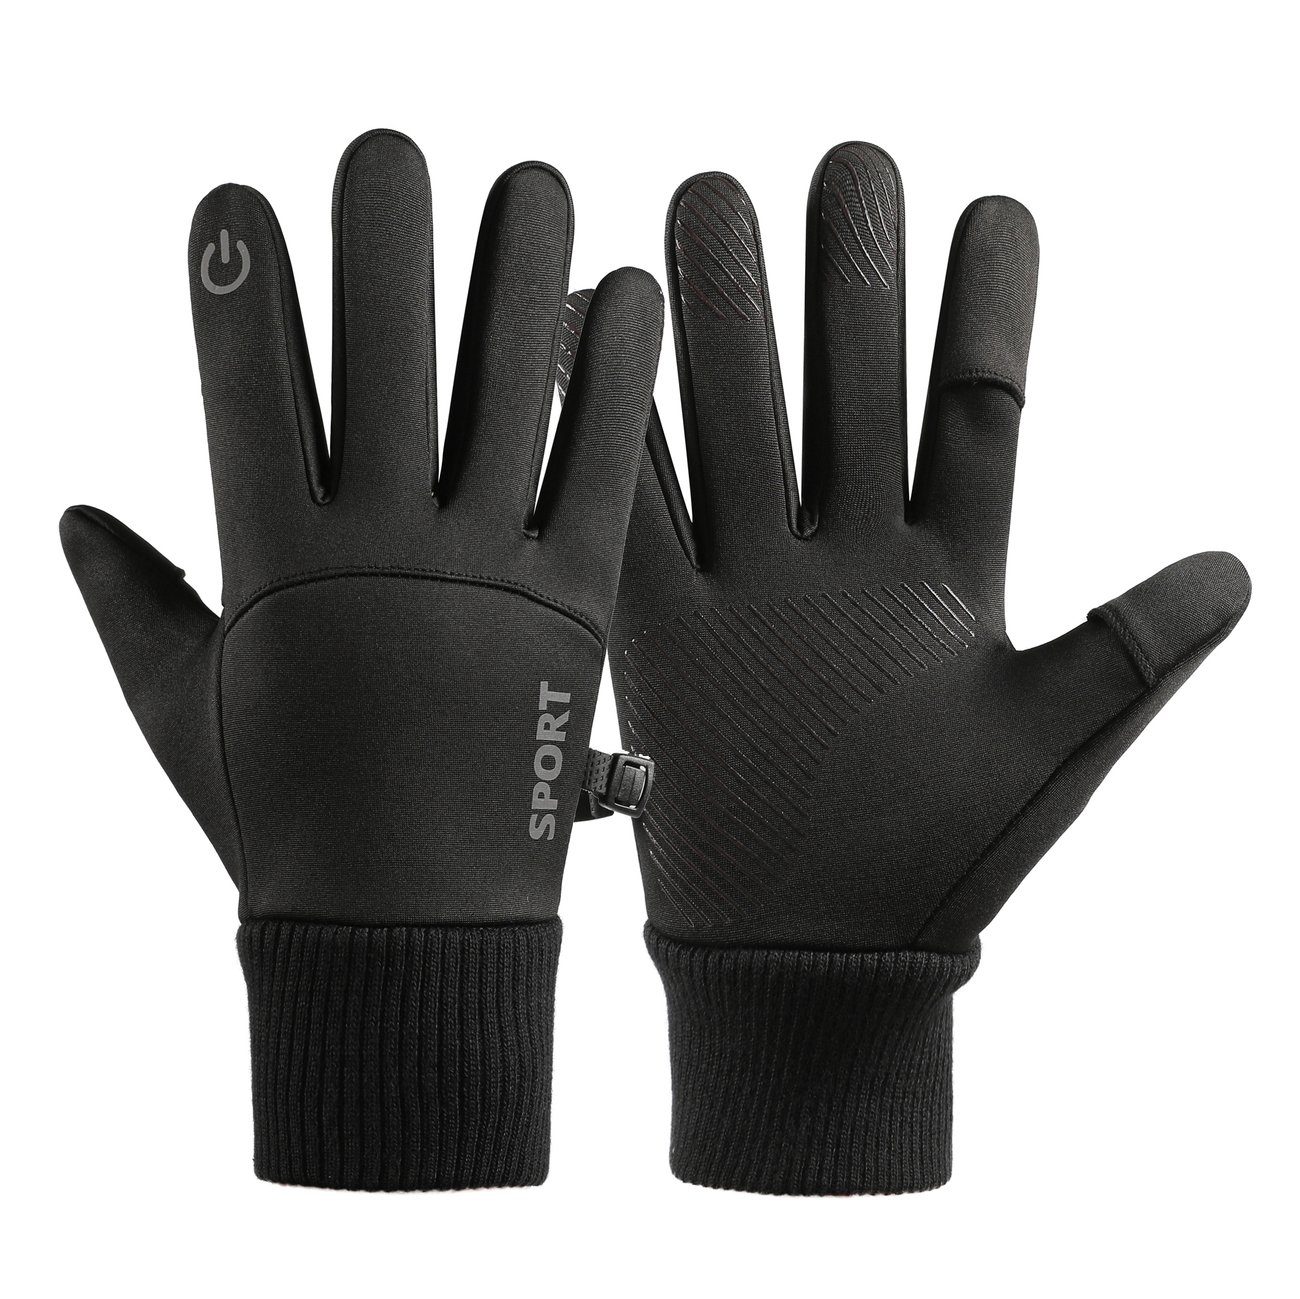 Sport-Handyhandschuhe Unisex 1453 Grau Outdoor Handschuhe Isolierte Fäustlinge COFI